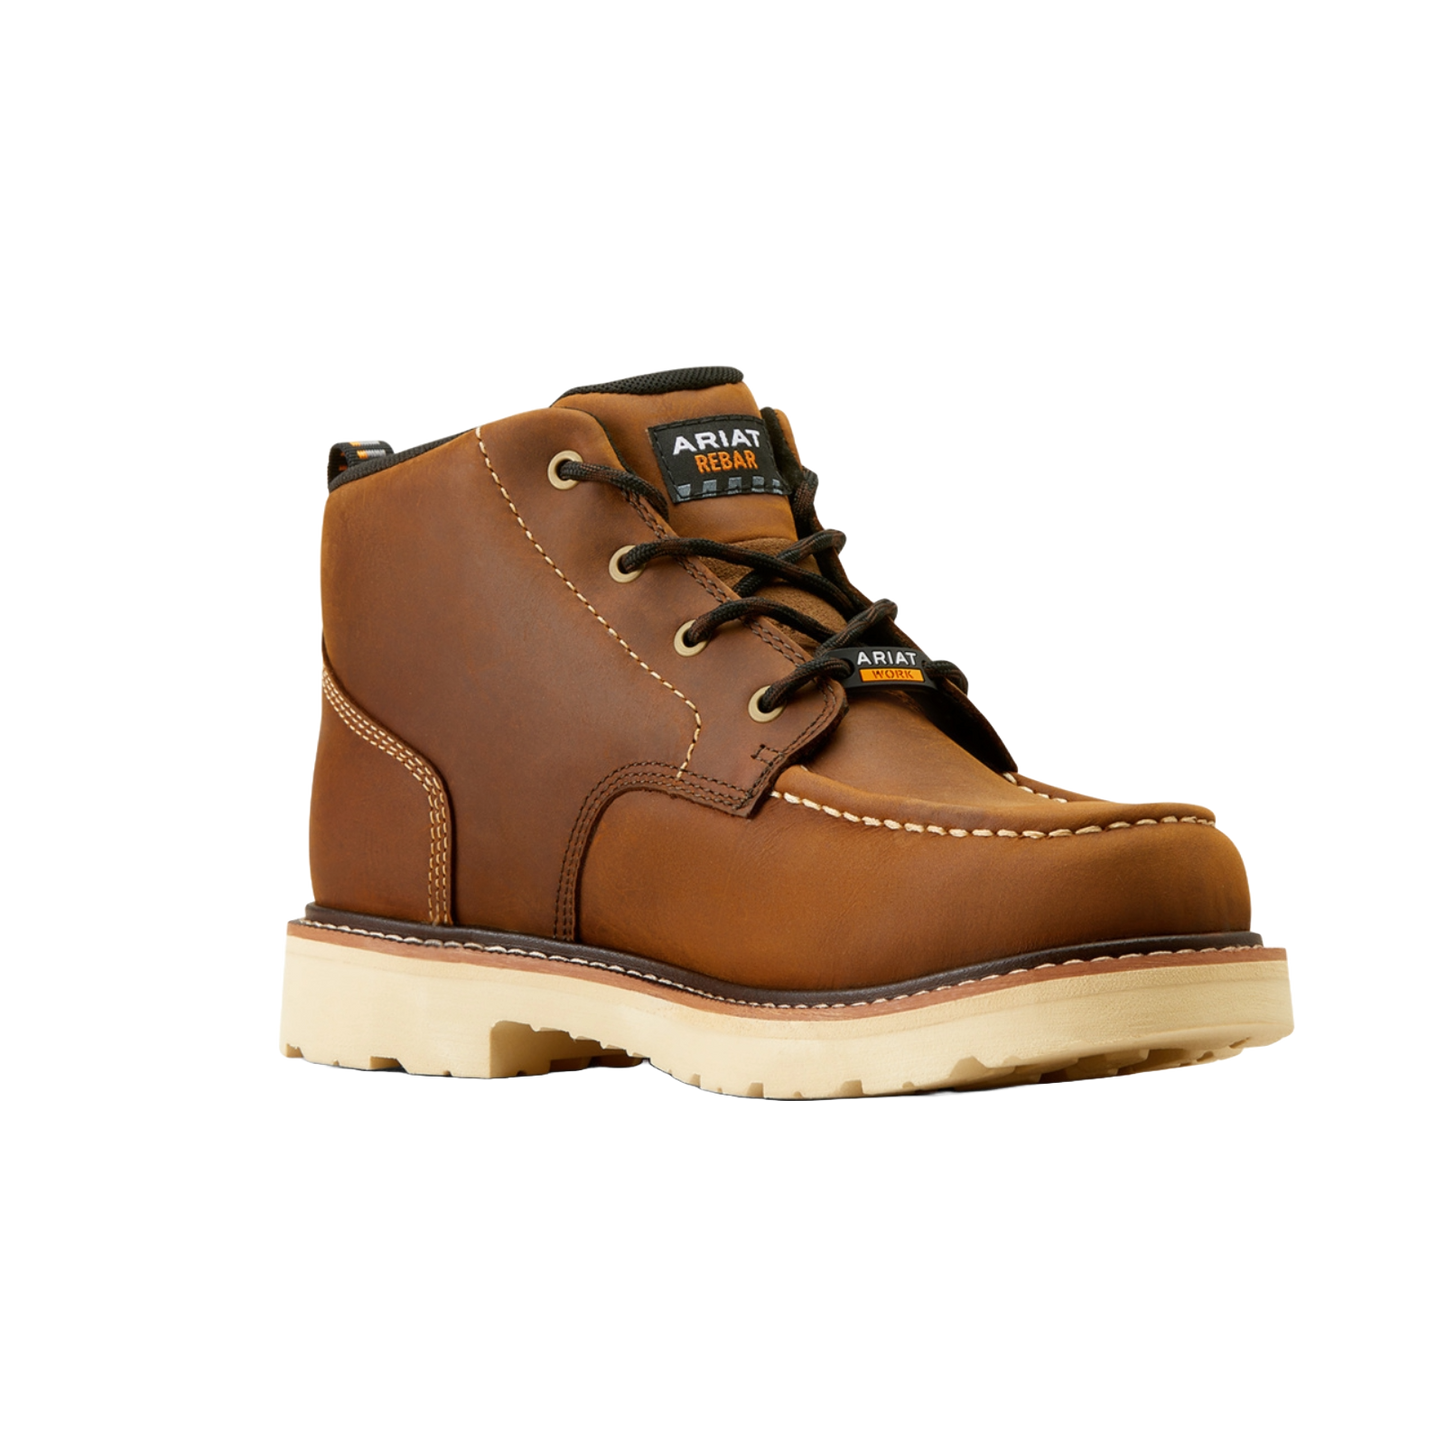 Ariat Men's Rebar Lift Chukka Distressed Brown Work Boots 10050846